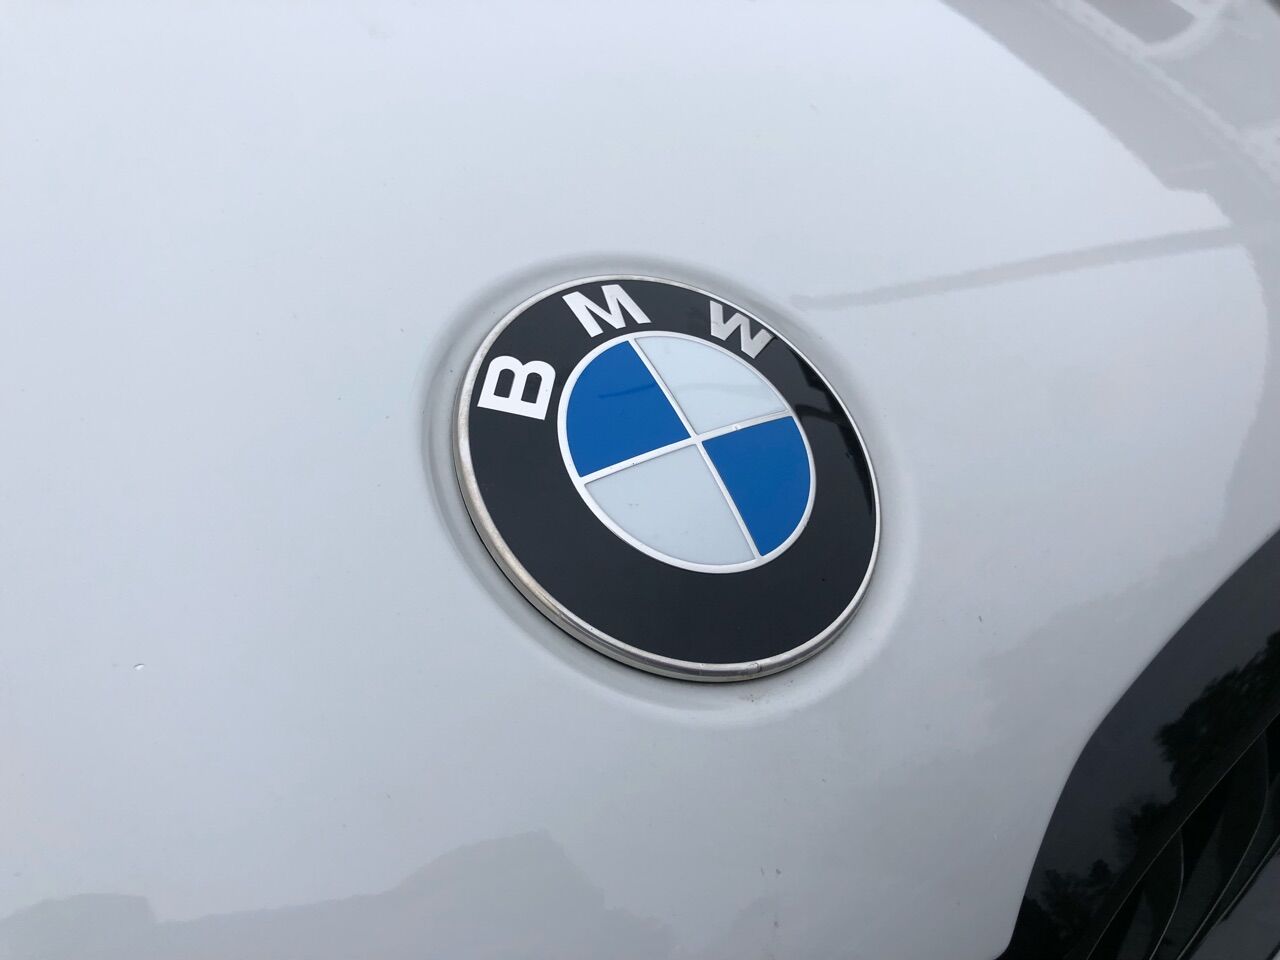 2018 BMW 5 Series 4dr Car